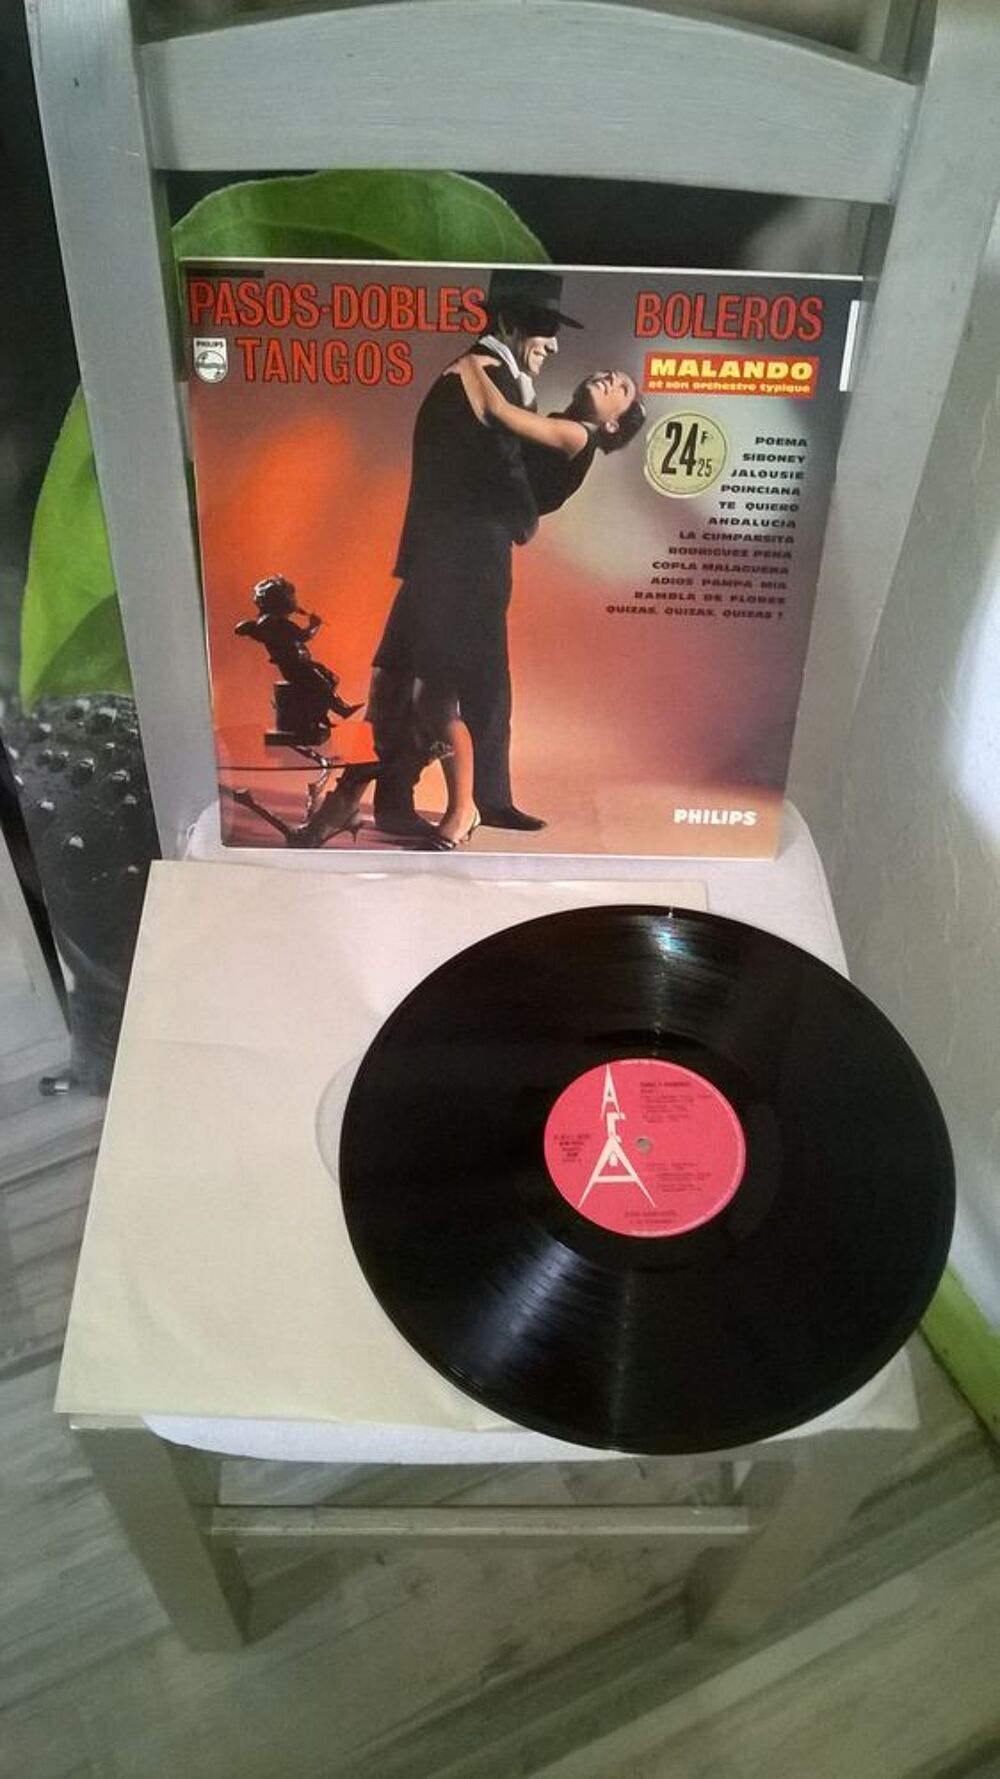 Vinyle Malando And His Tango Orchestra
Boleros Pasos-Dobles CD et vinyles